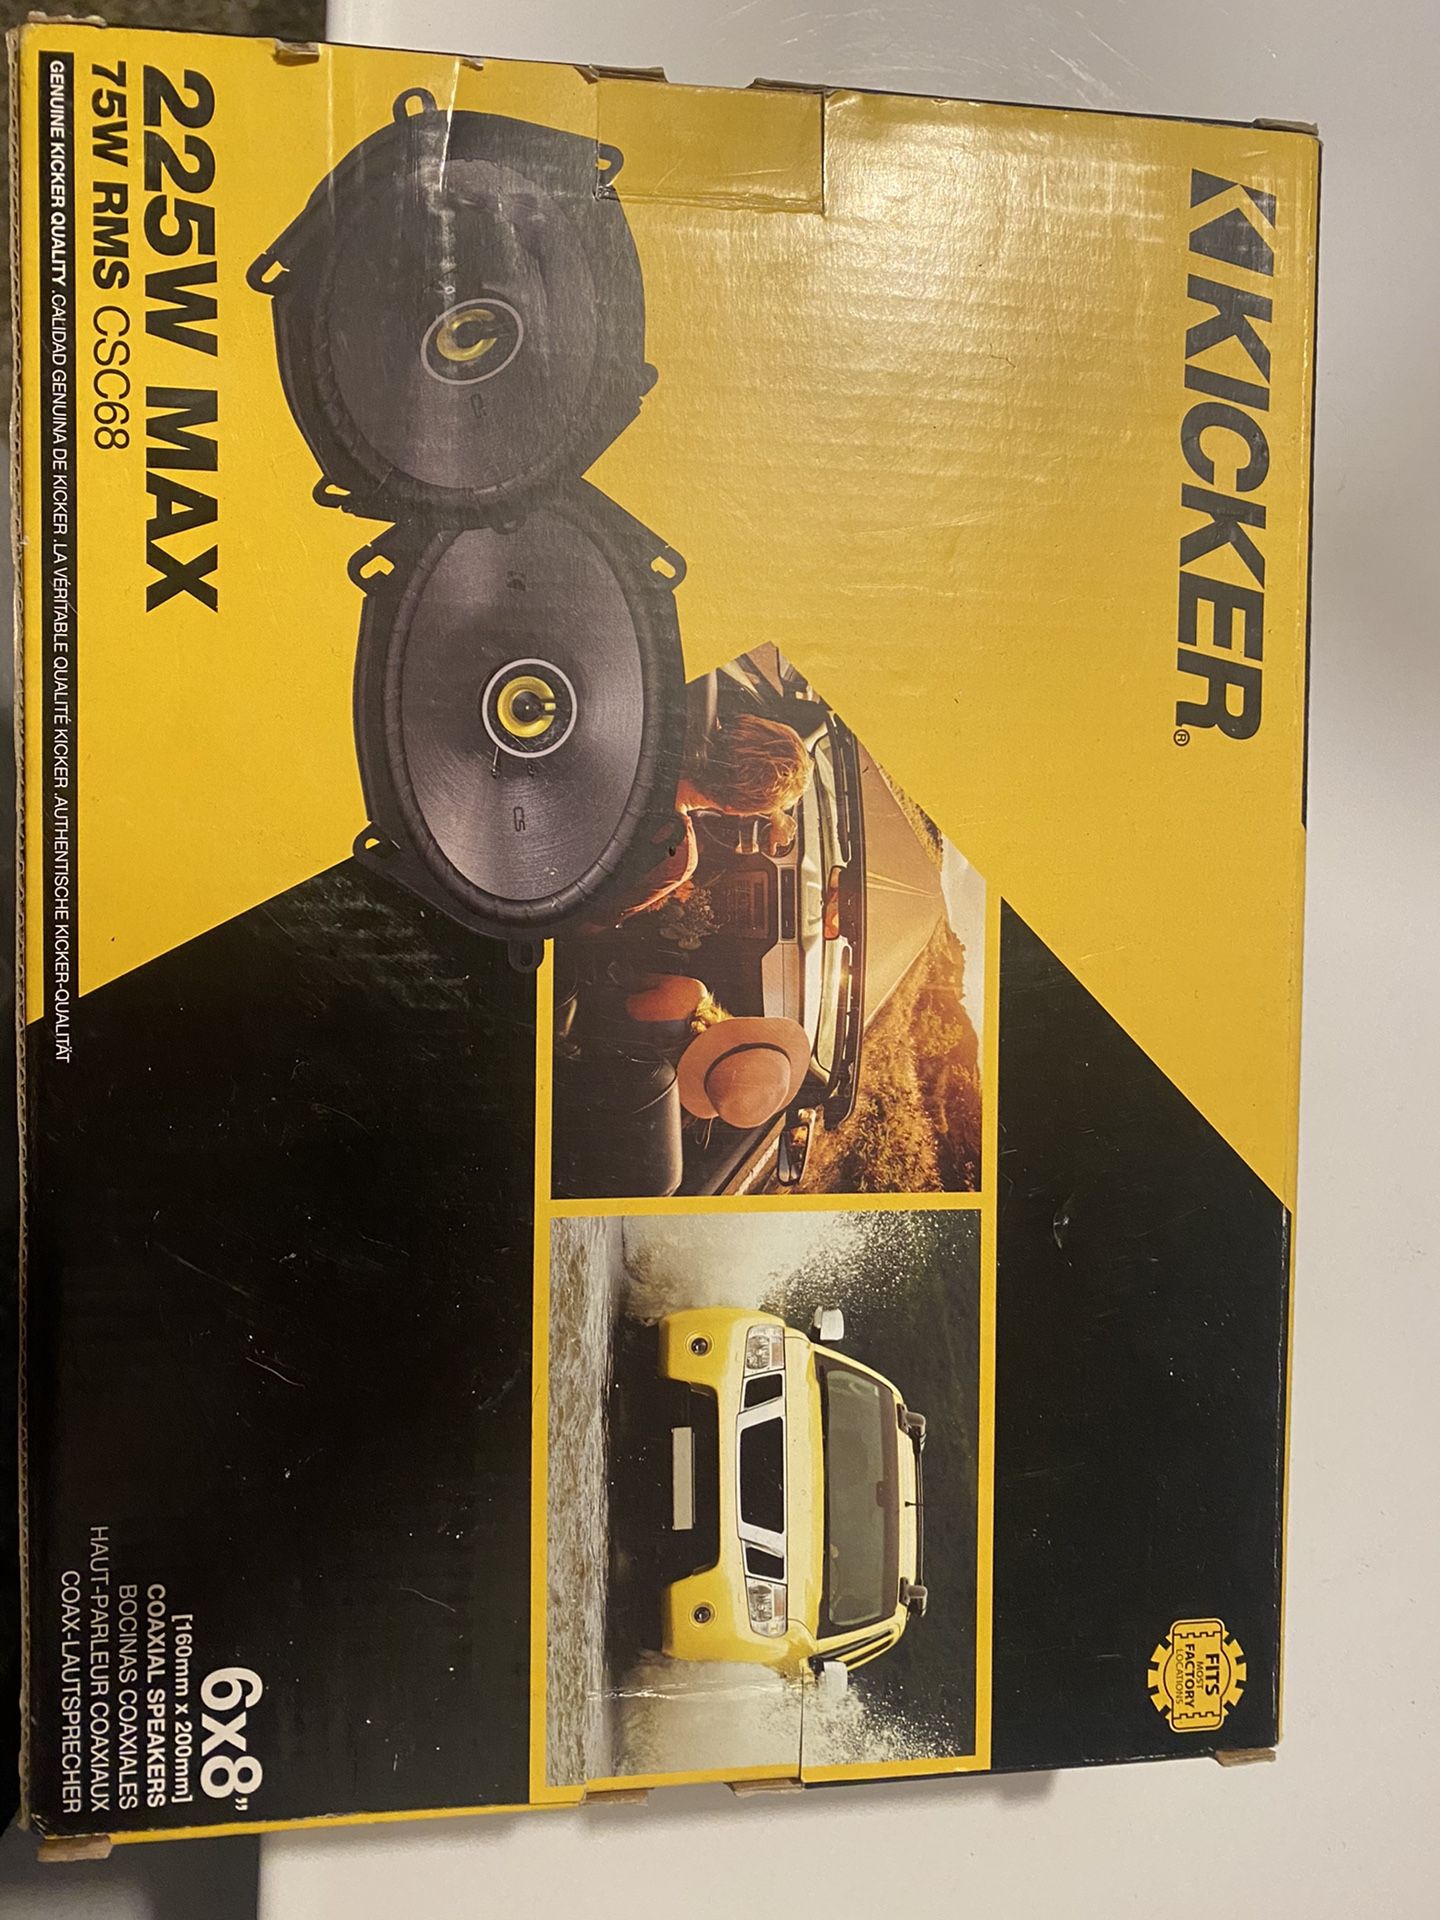 Kicker 6x8 speakers